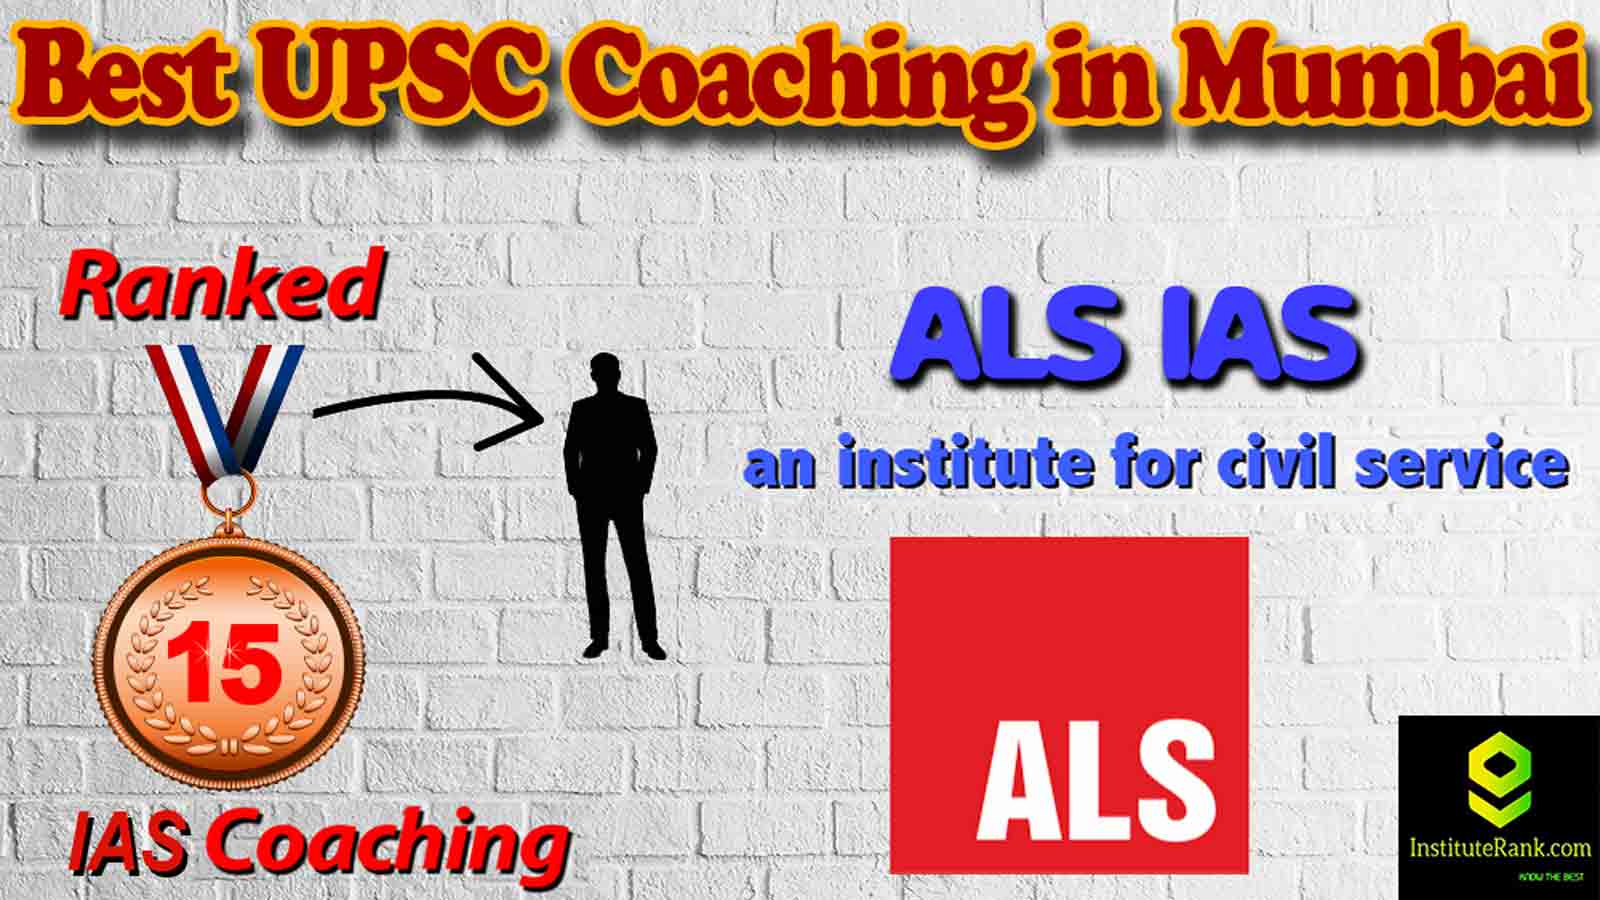 Rank 15 Best IAS Coaching in Mumbai